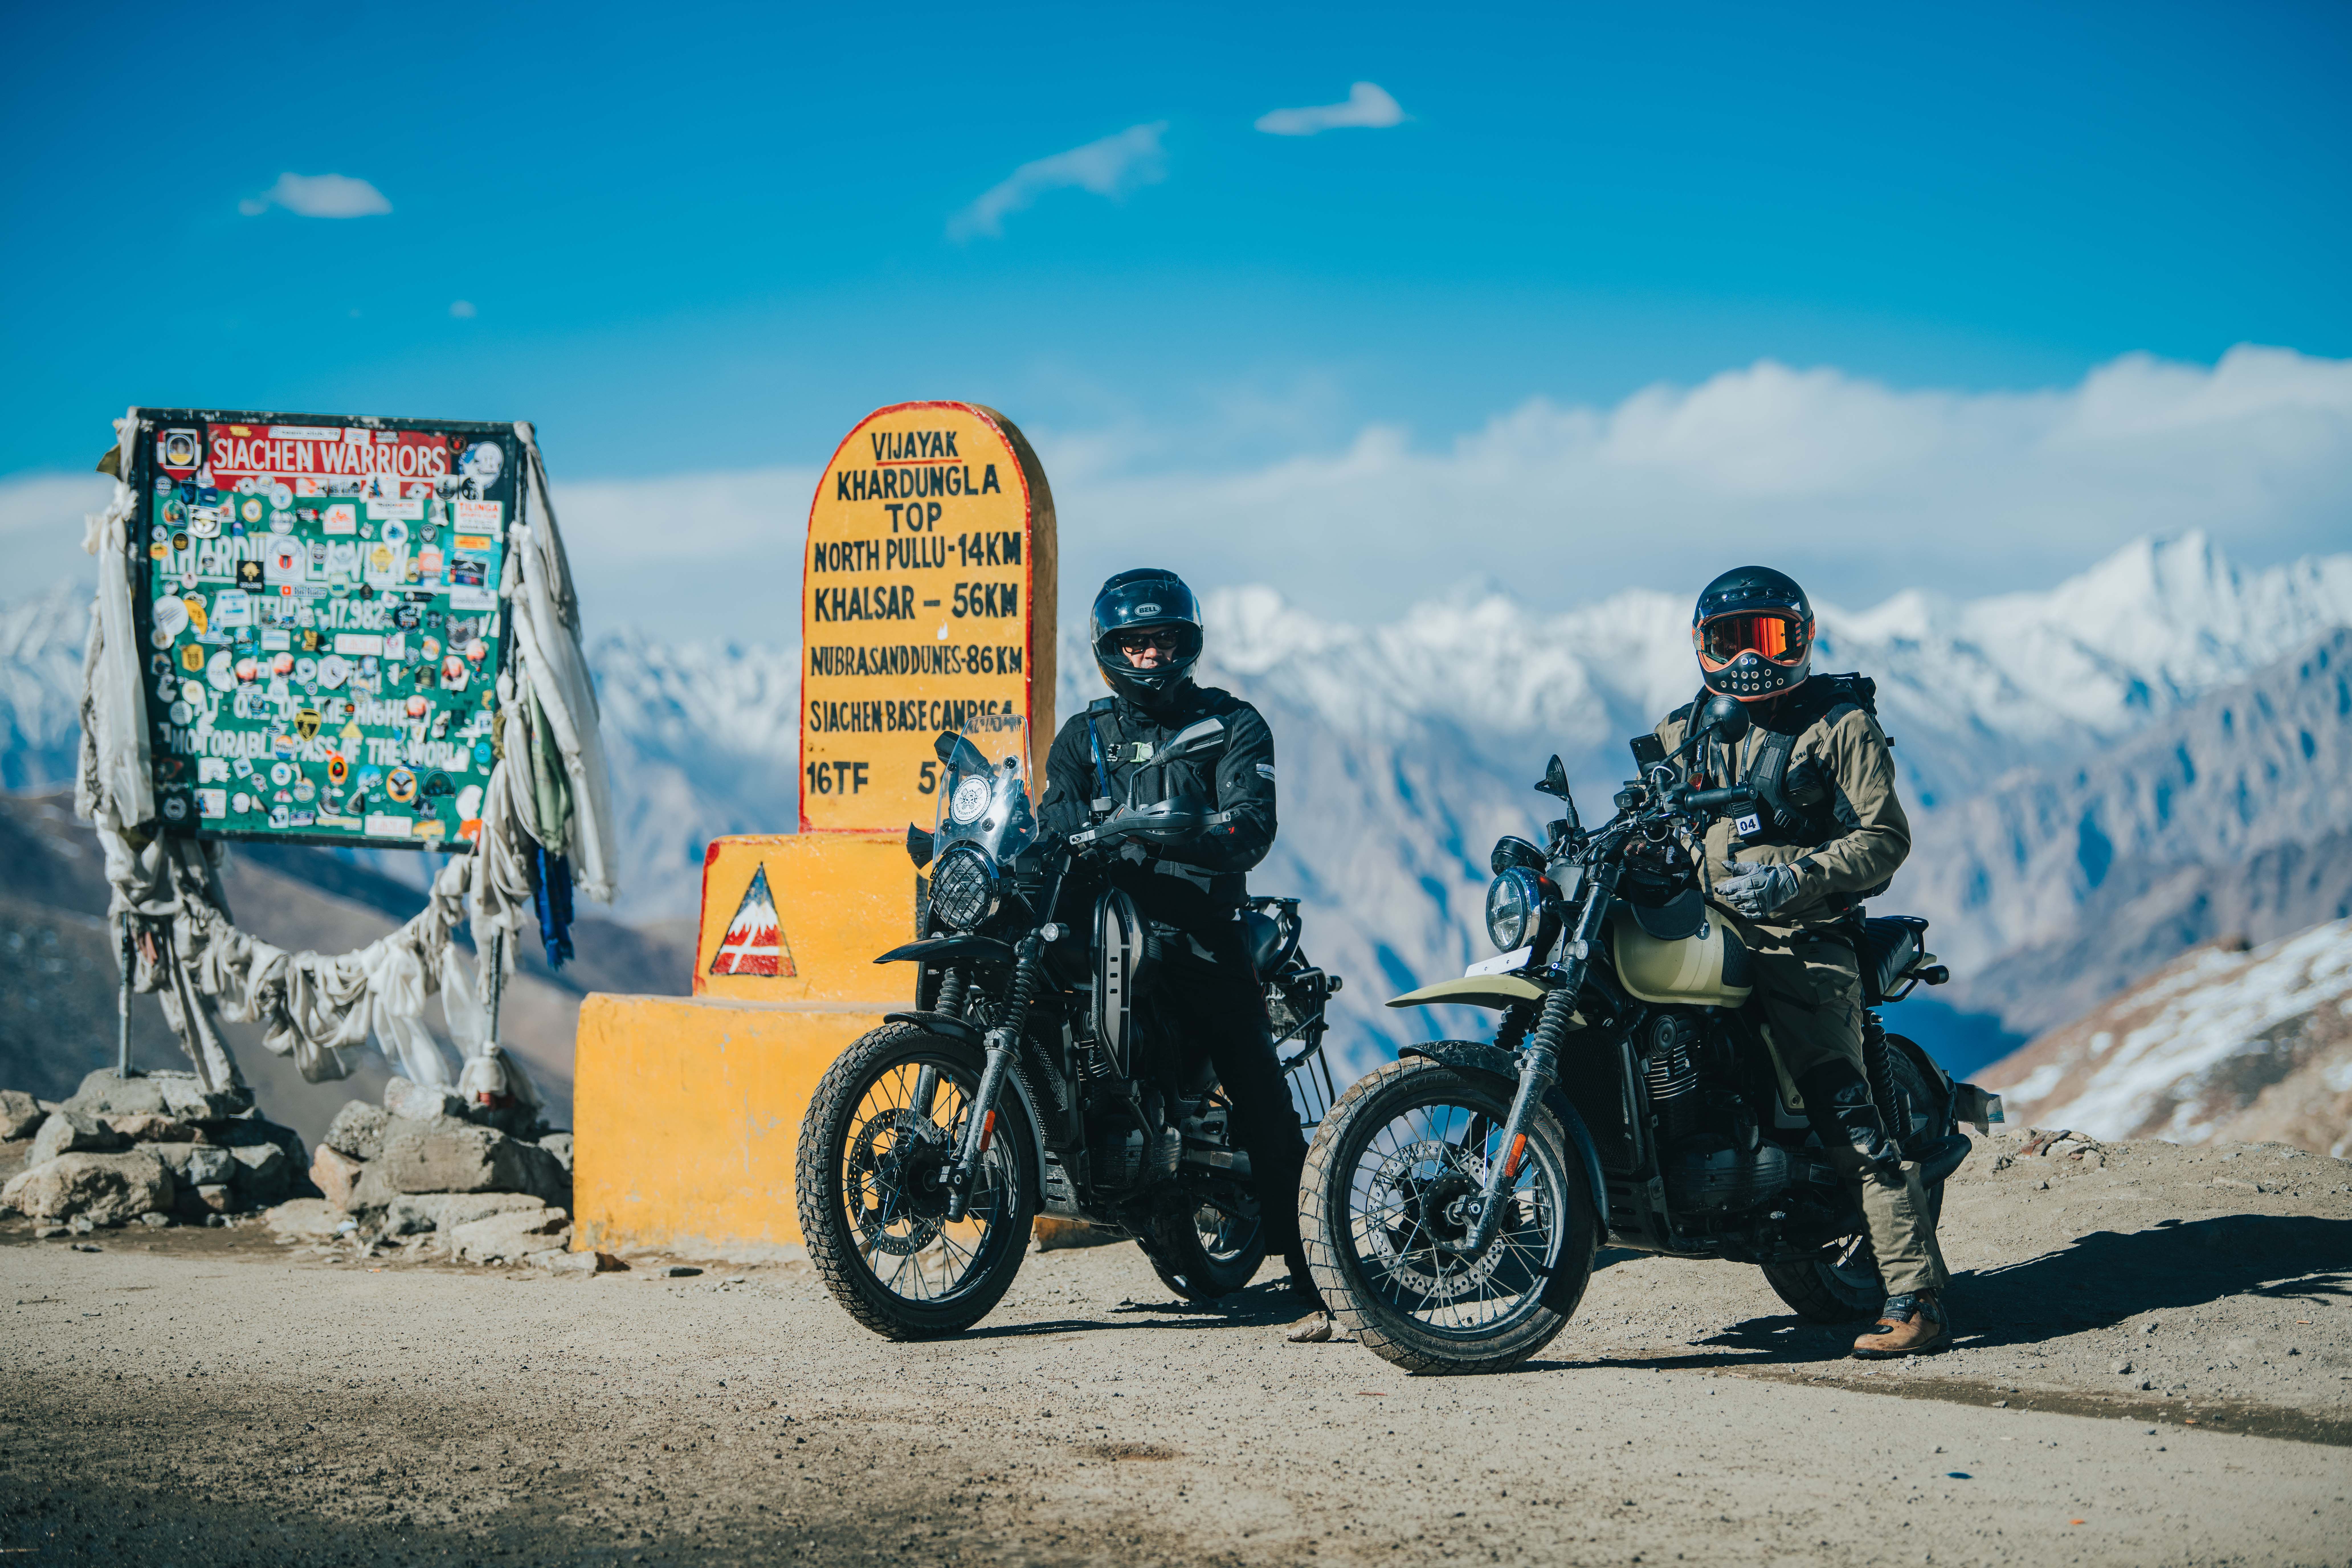 jawa-yezdi-motorcycles-announcesservice-is-on-us-initiative-for-its-kommuniti-members-en-route-ladakh